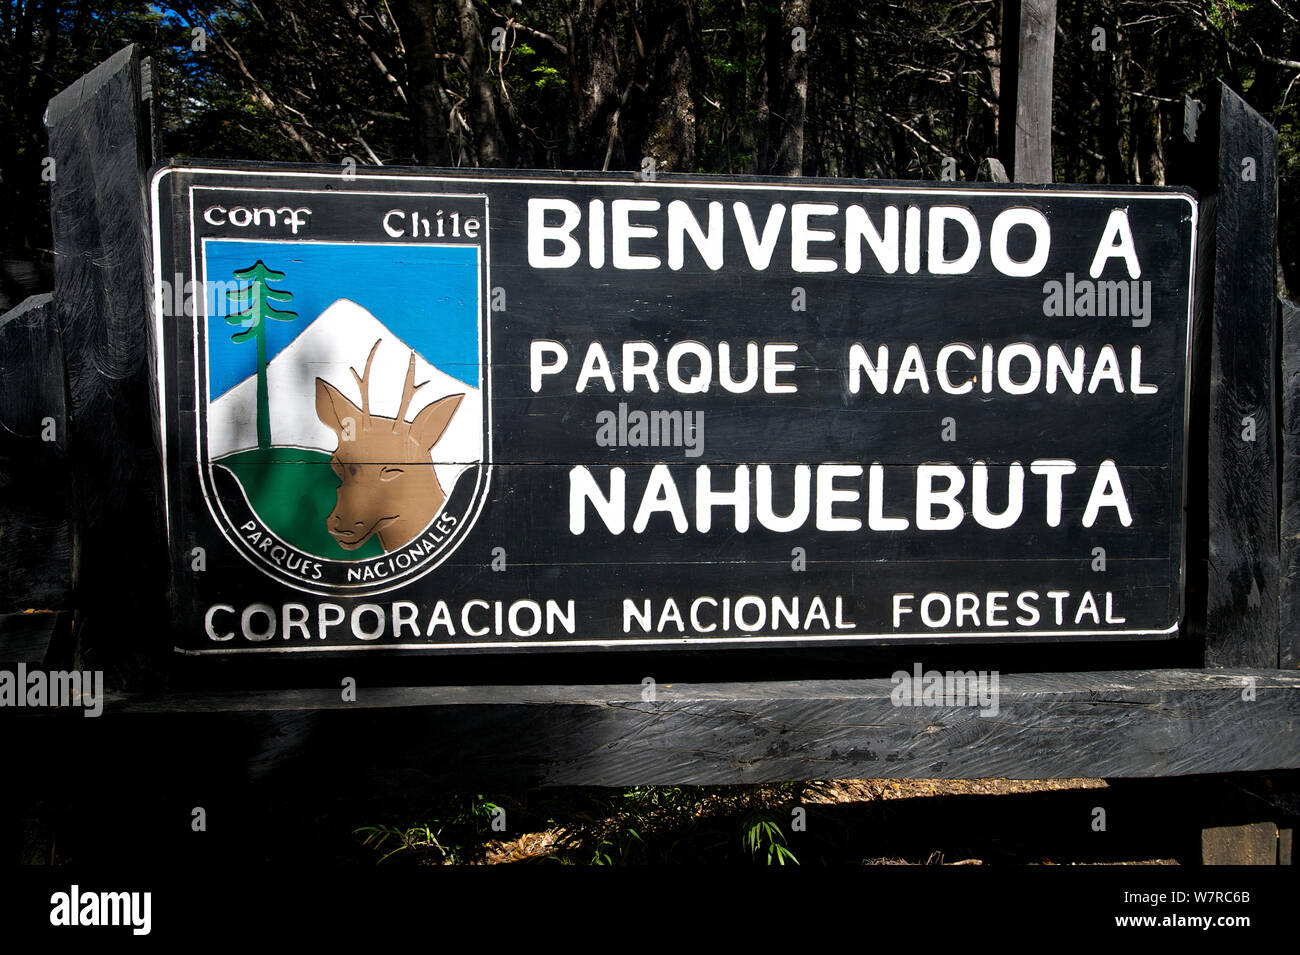 Entrada del Parque Nacional Nahuelbuta, Chile, diciembre de 2012 Foto de stock